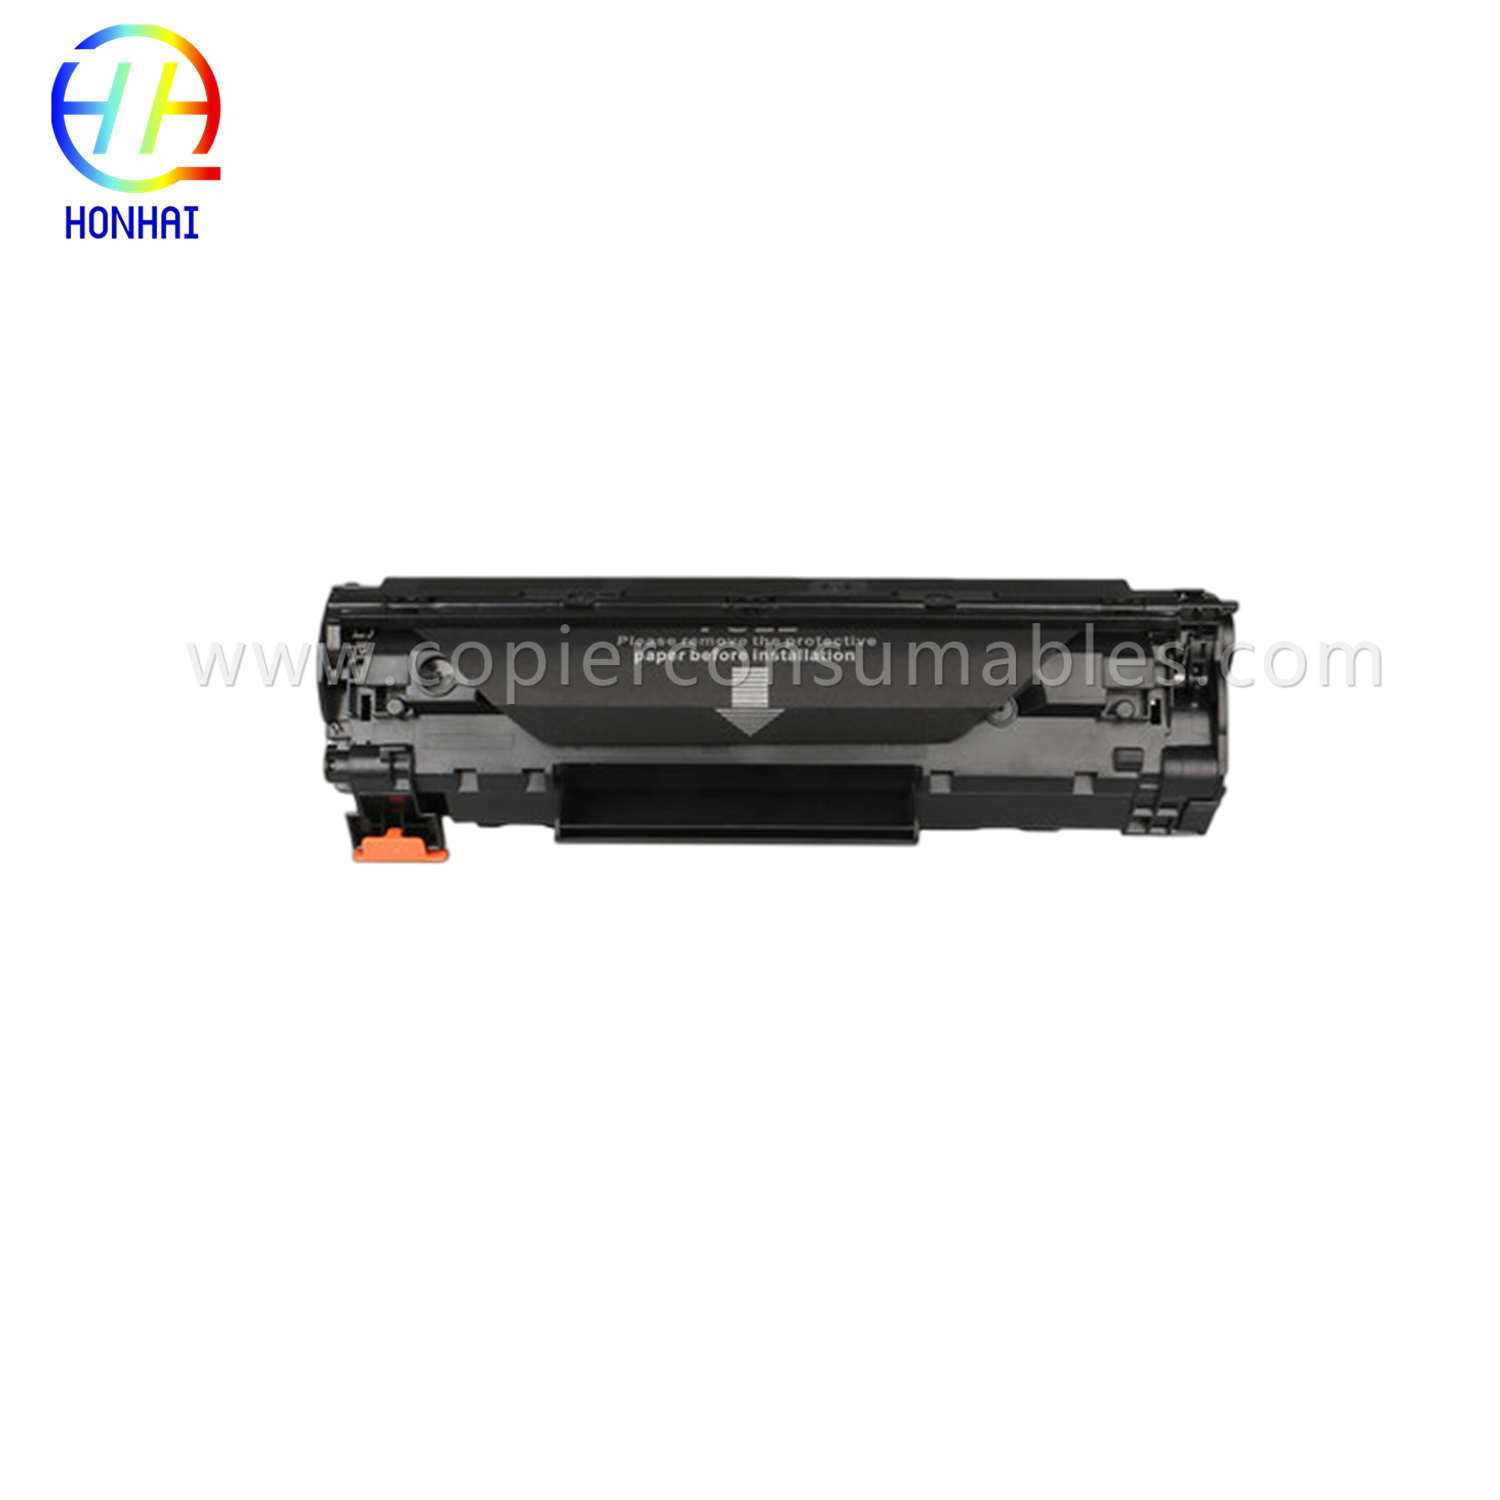 https://www.copierhonhaitech.com/toner-cartridge-kuri-hp-laserjet-pro-m12w-mfp-m26-m26nw-79a-cf279a-oem-product/